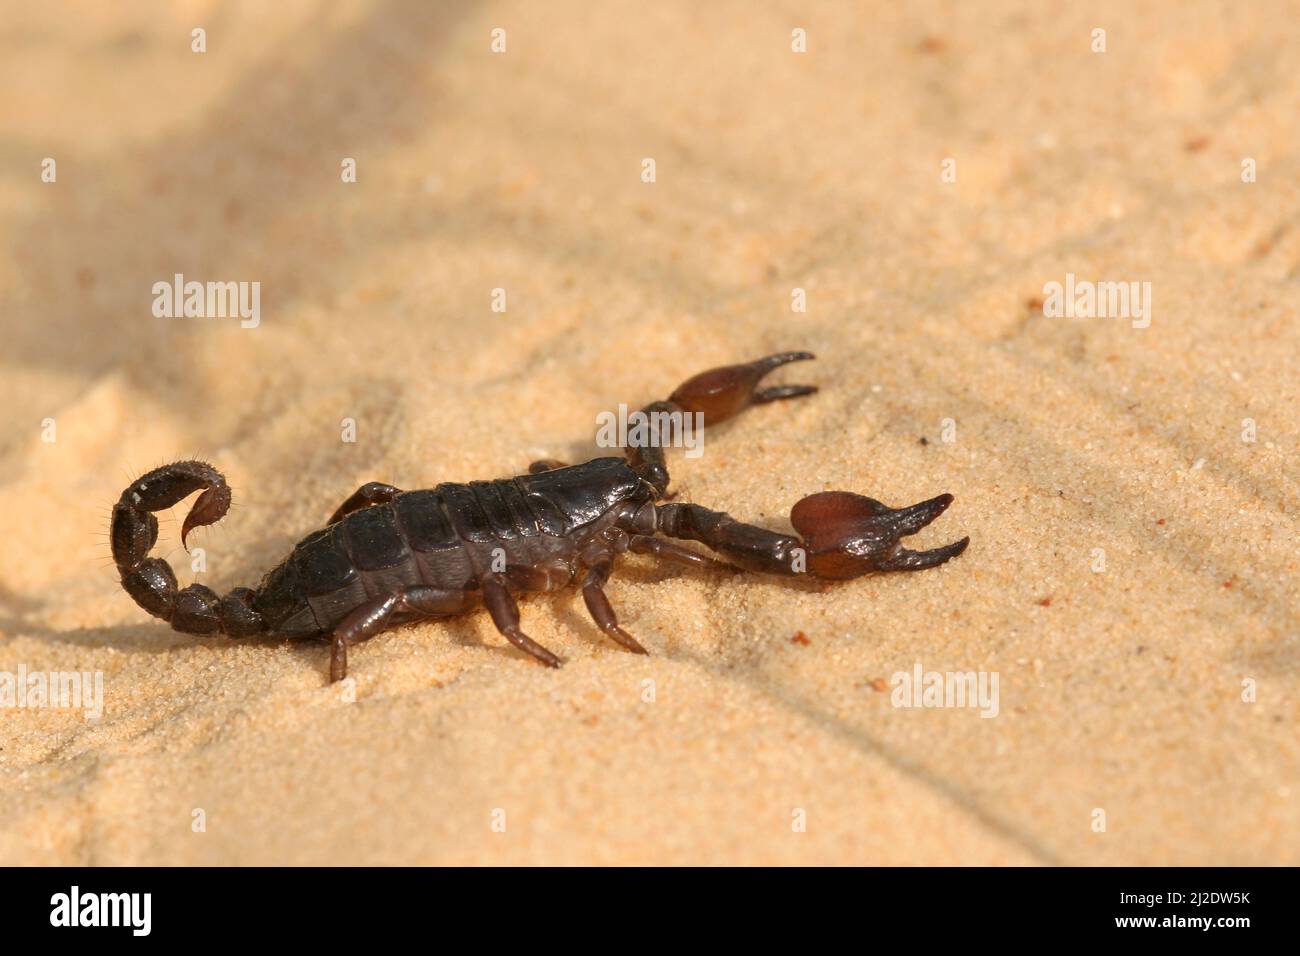 Israeli black scorpion Scorpio maurus fuscus on a sand dune Photographed in Israel in Summer September Stock Photo